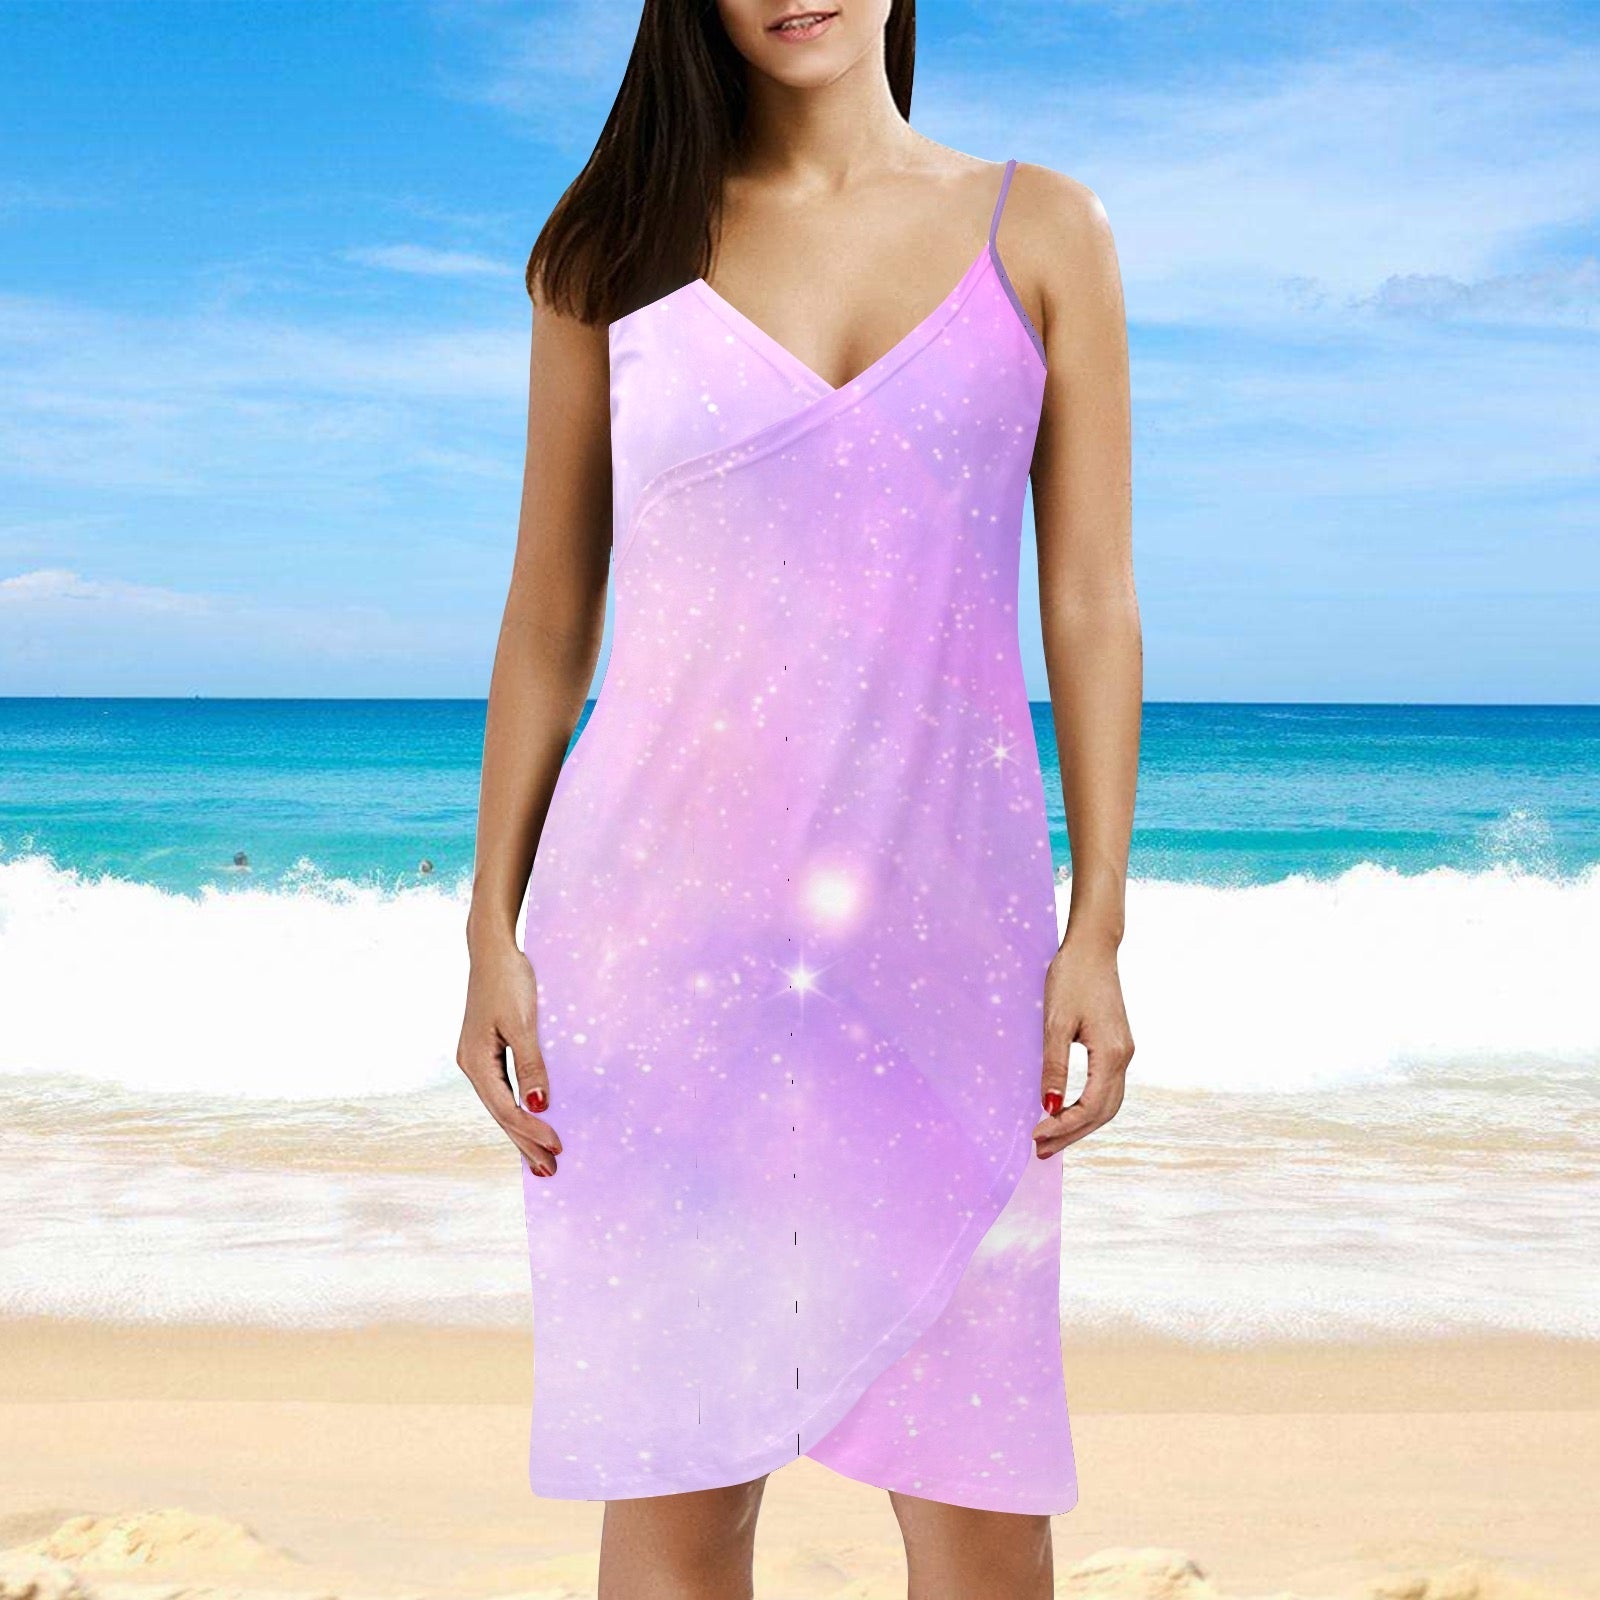 Spaghetti Strap Backless Beach Dress (D65) - Shell Yeah by JaksMediumPurpleSF1EC5097E9CF4D2B9E2B7CCA44E9E685